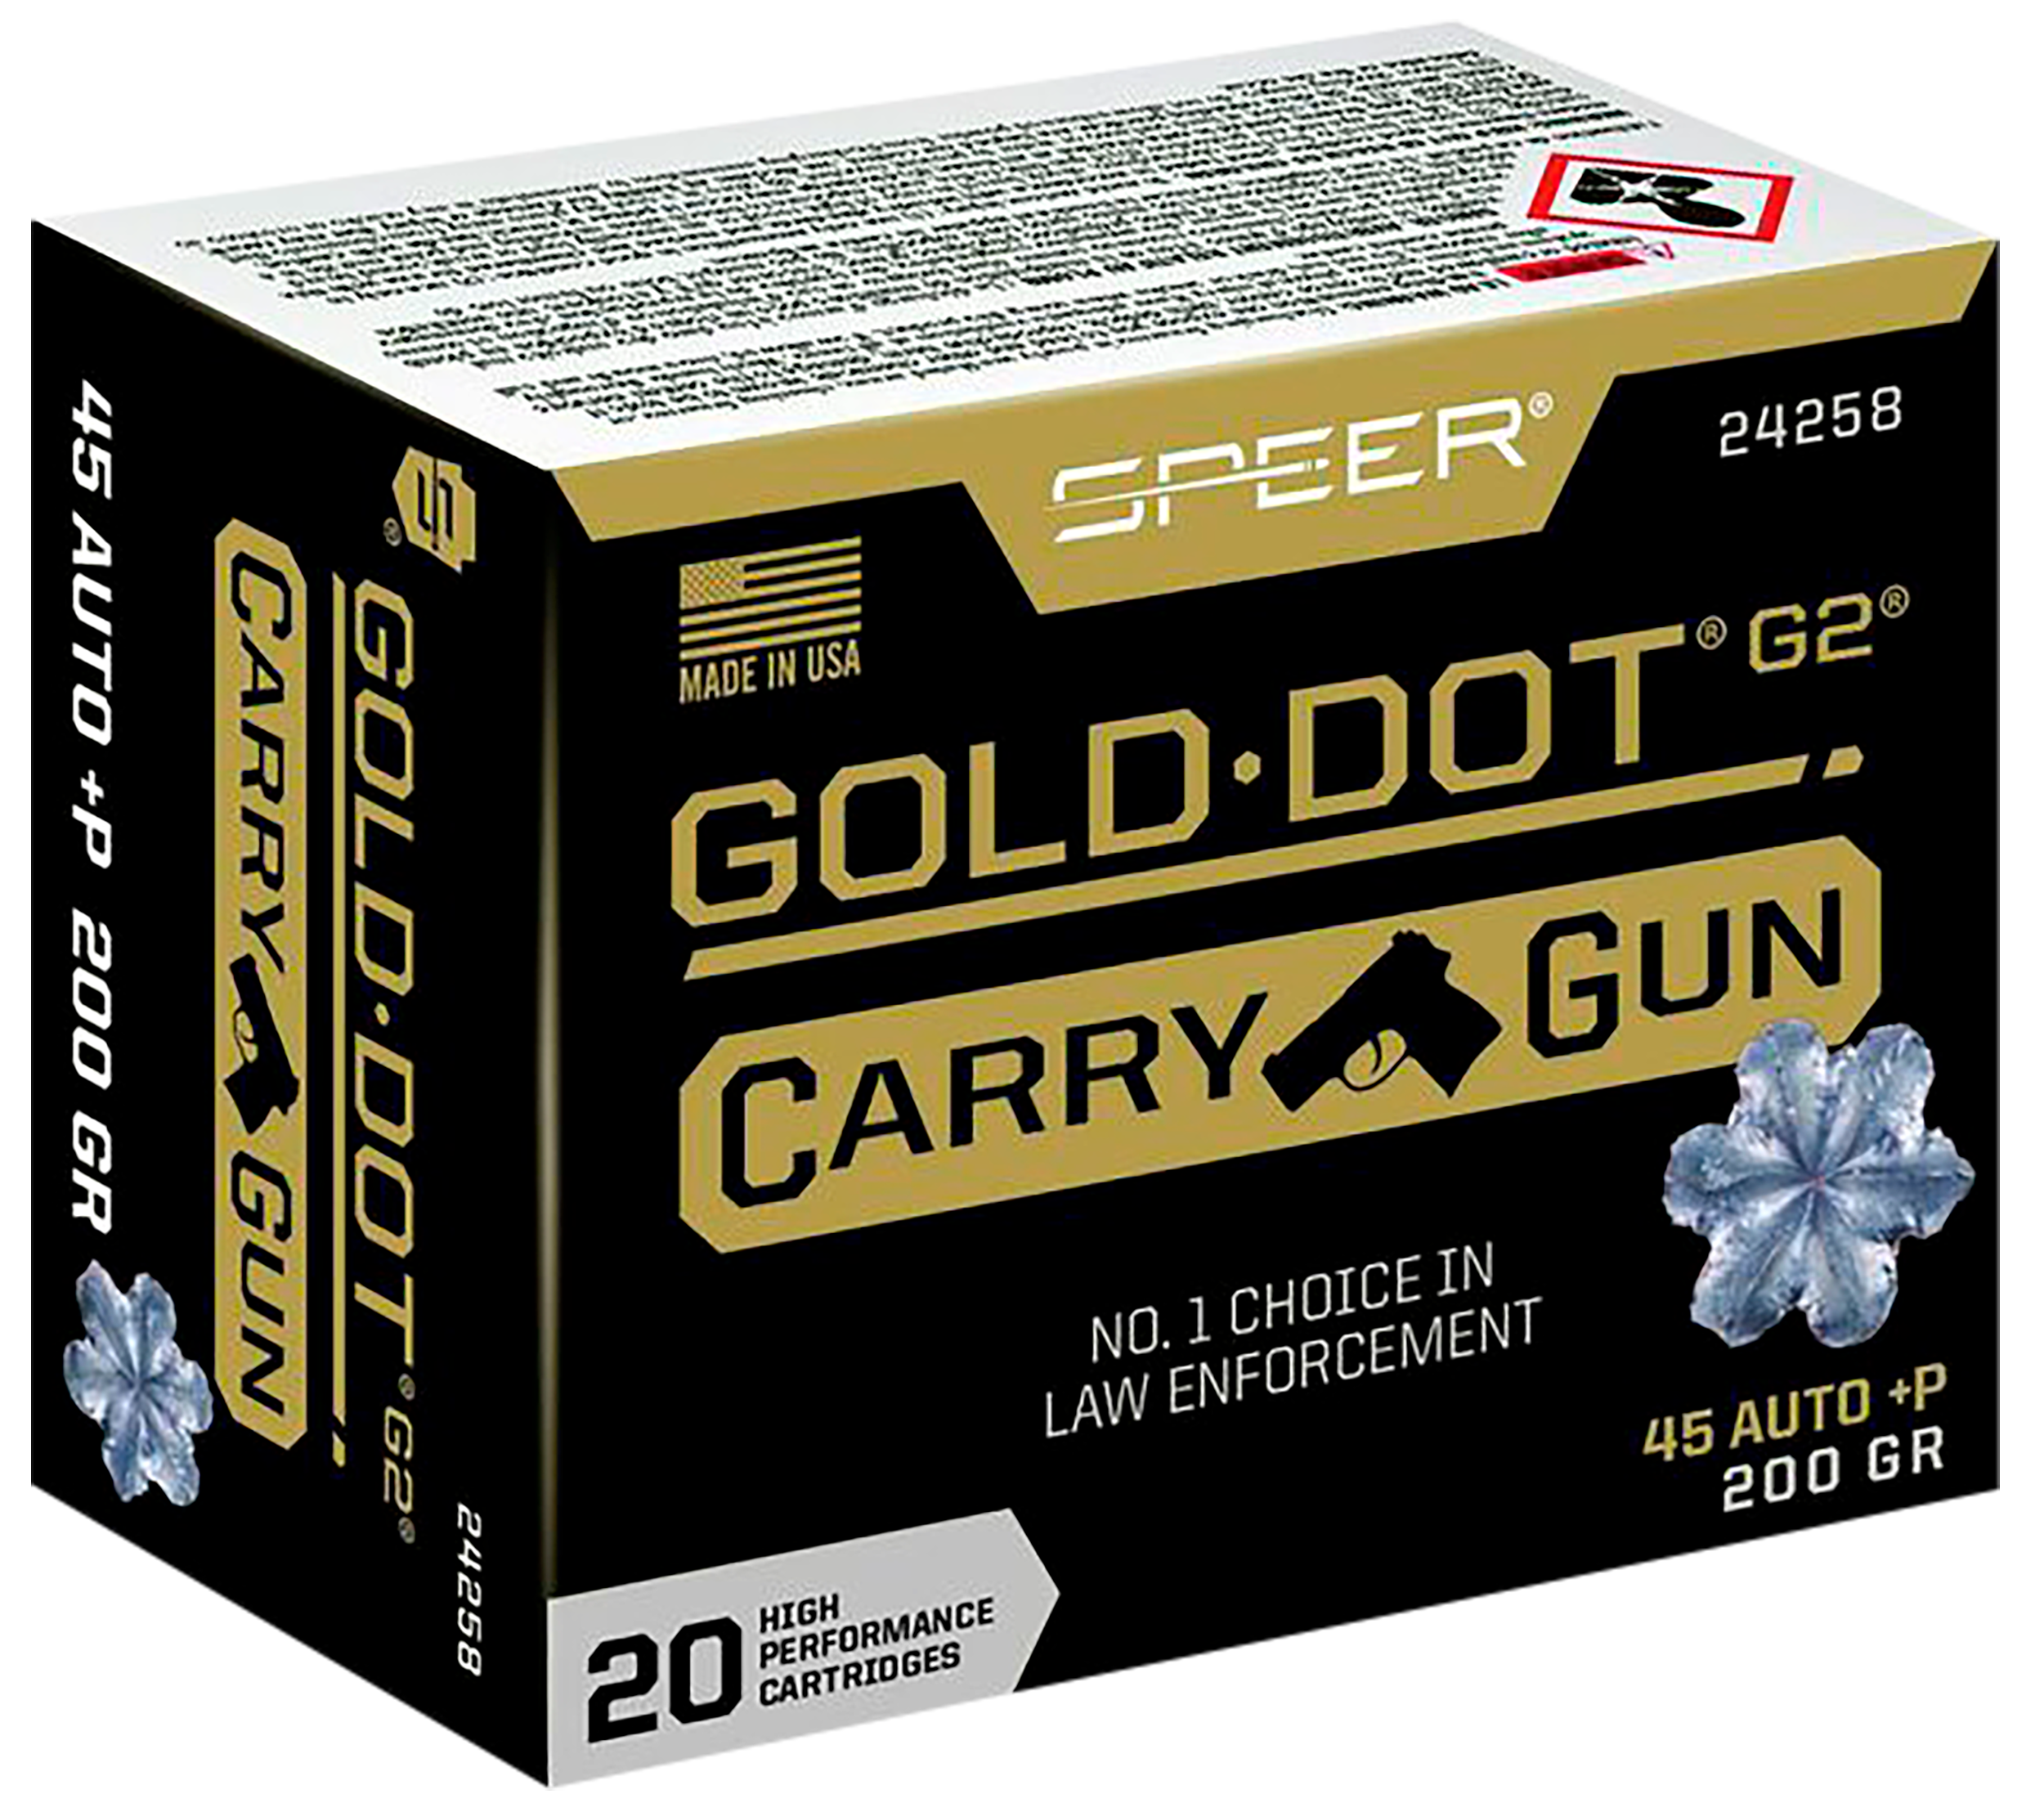 Speer Gold Dot Ammunition - 40 S&W - 165 Grain Gold Dot Hollow Point - 20  Rounds - Nickel Plated Brass